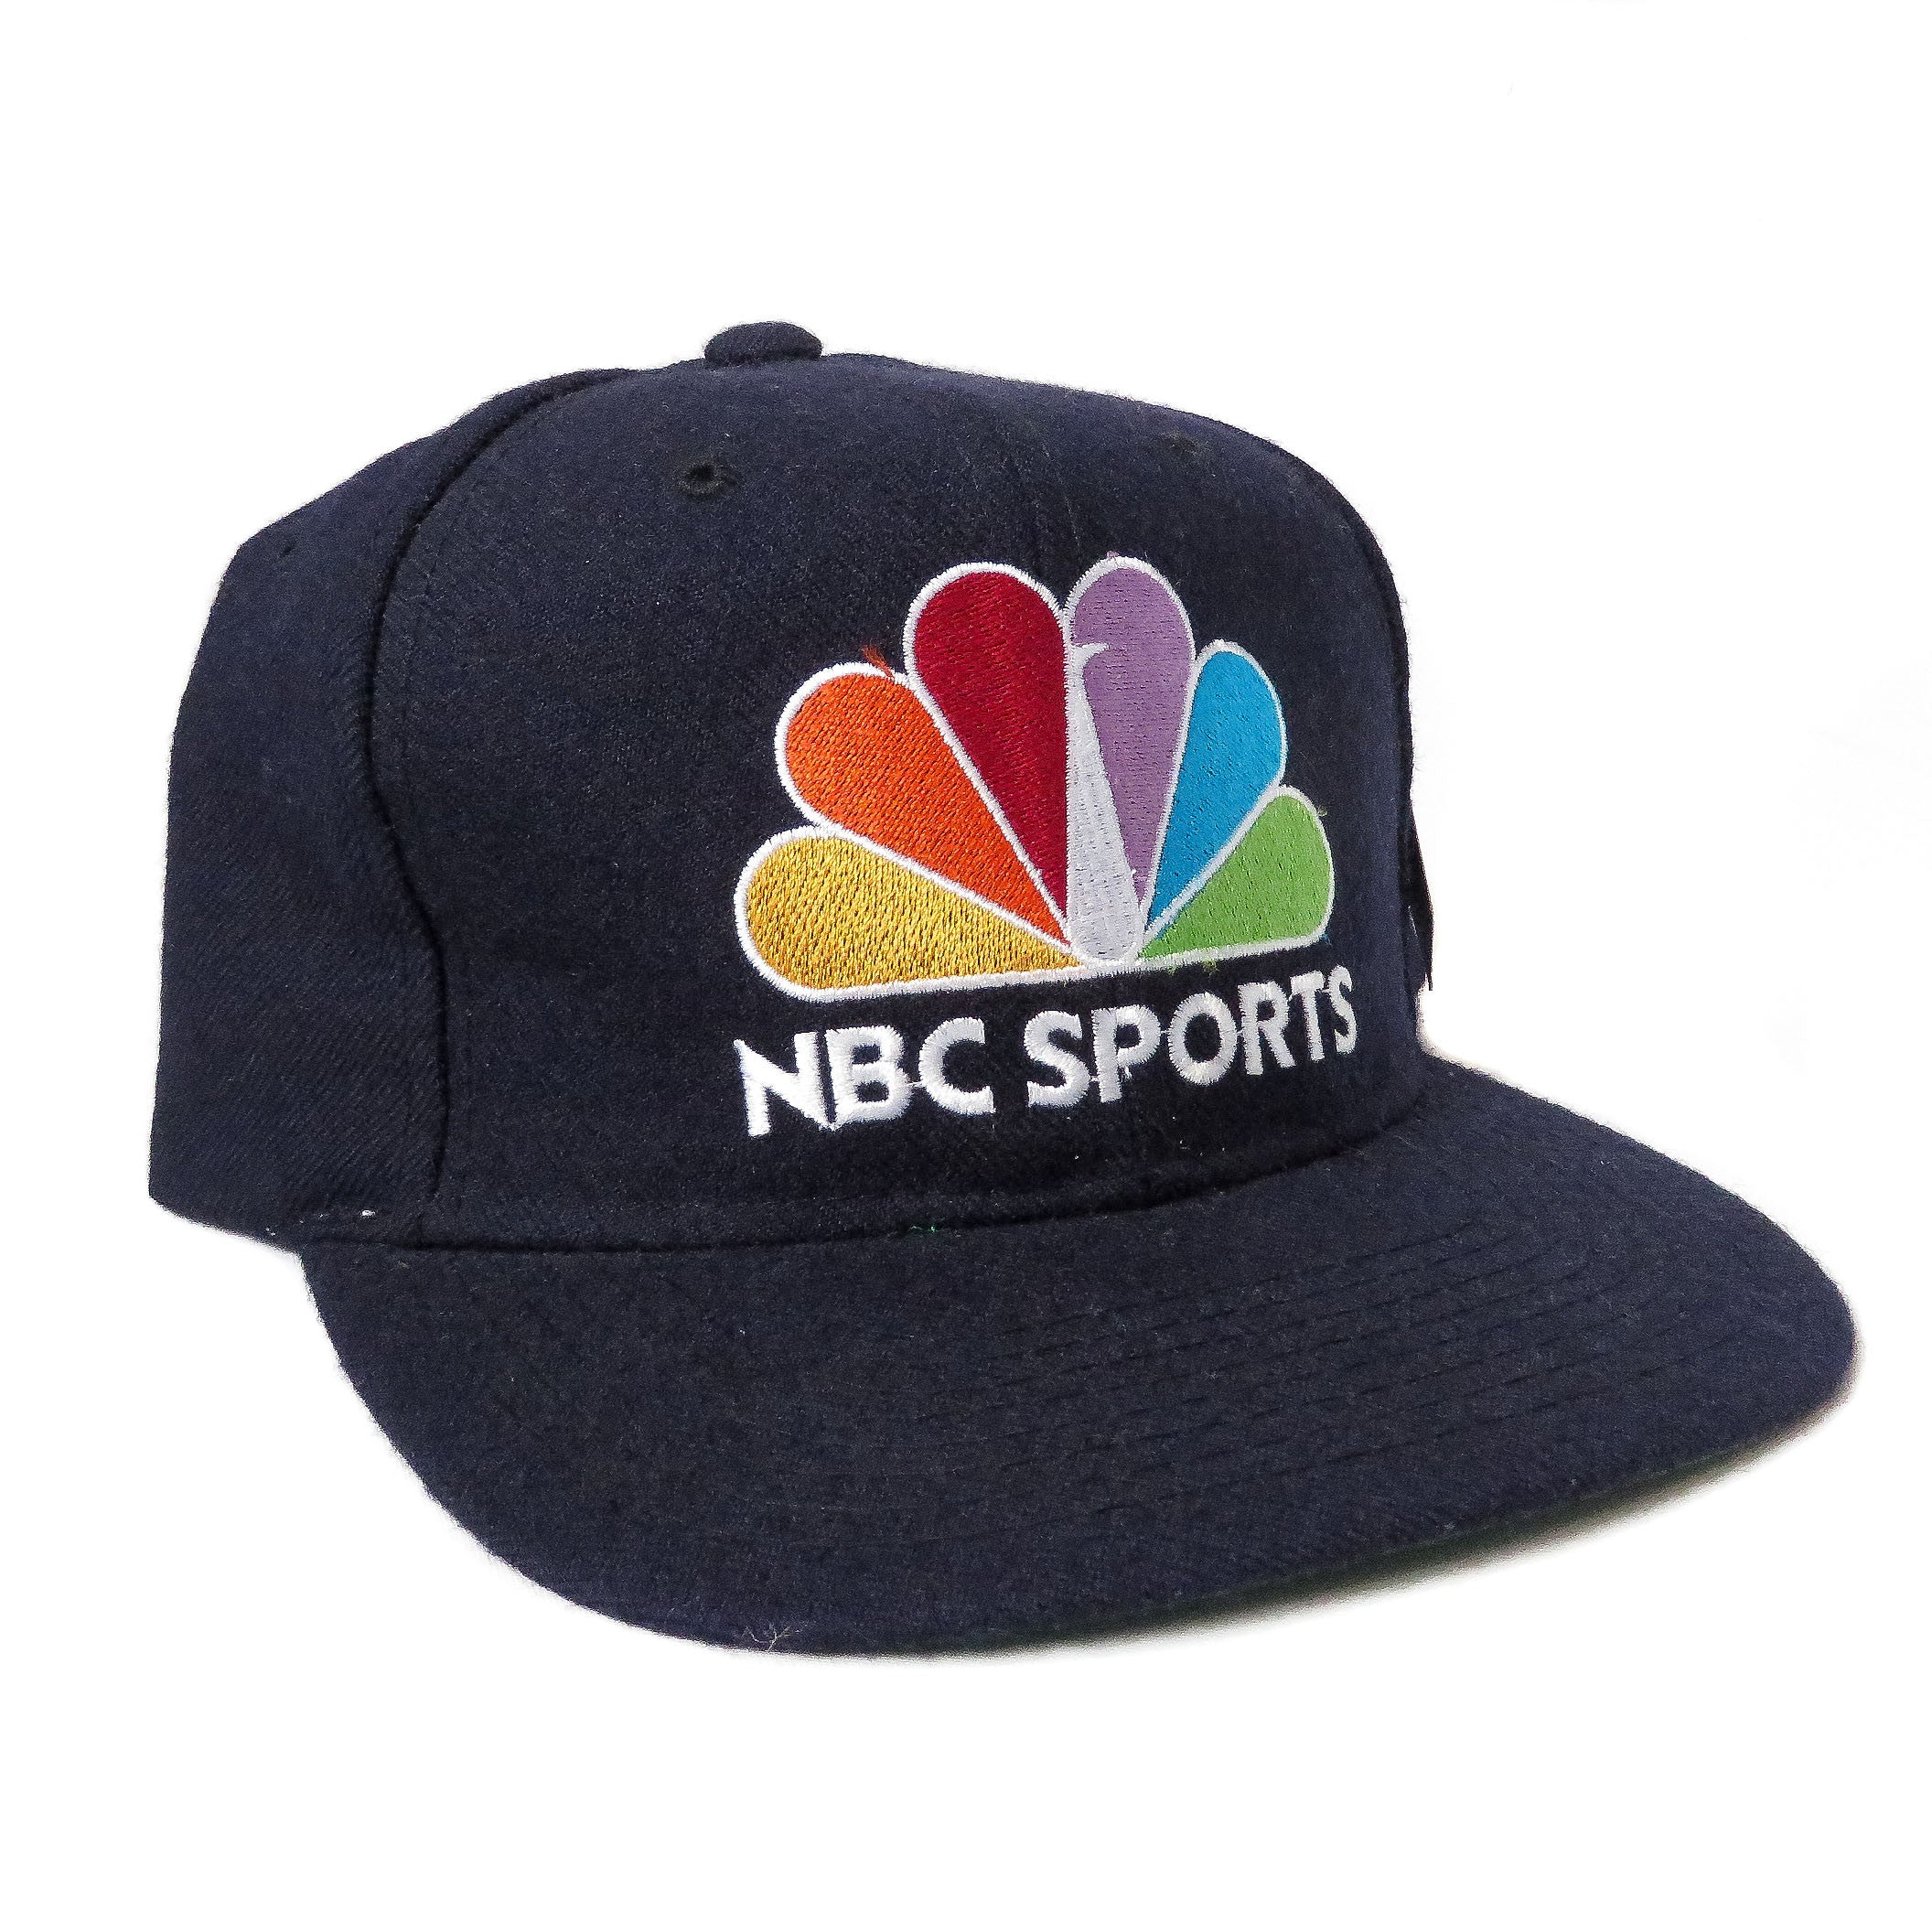 Vintage NBC Sports Starter Snapback Hat